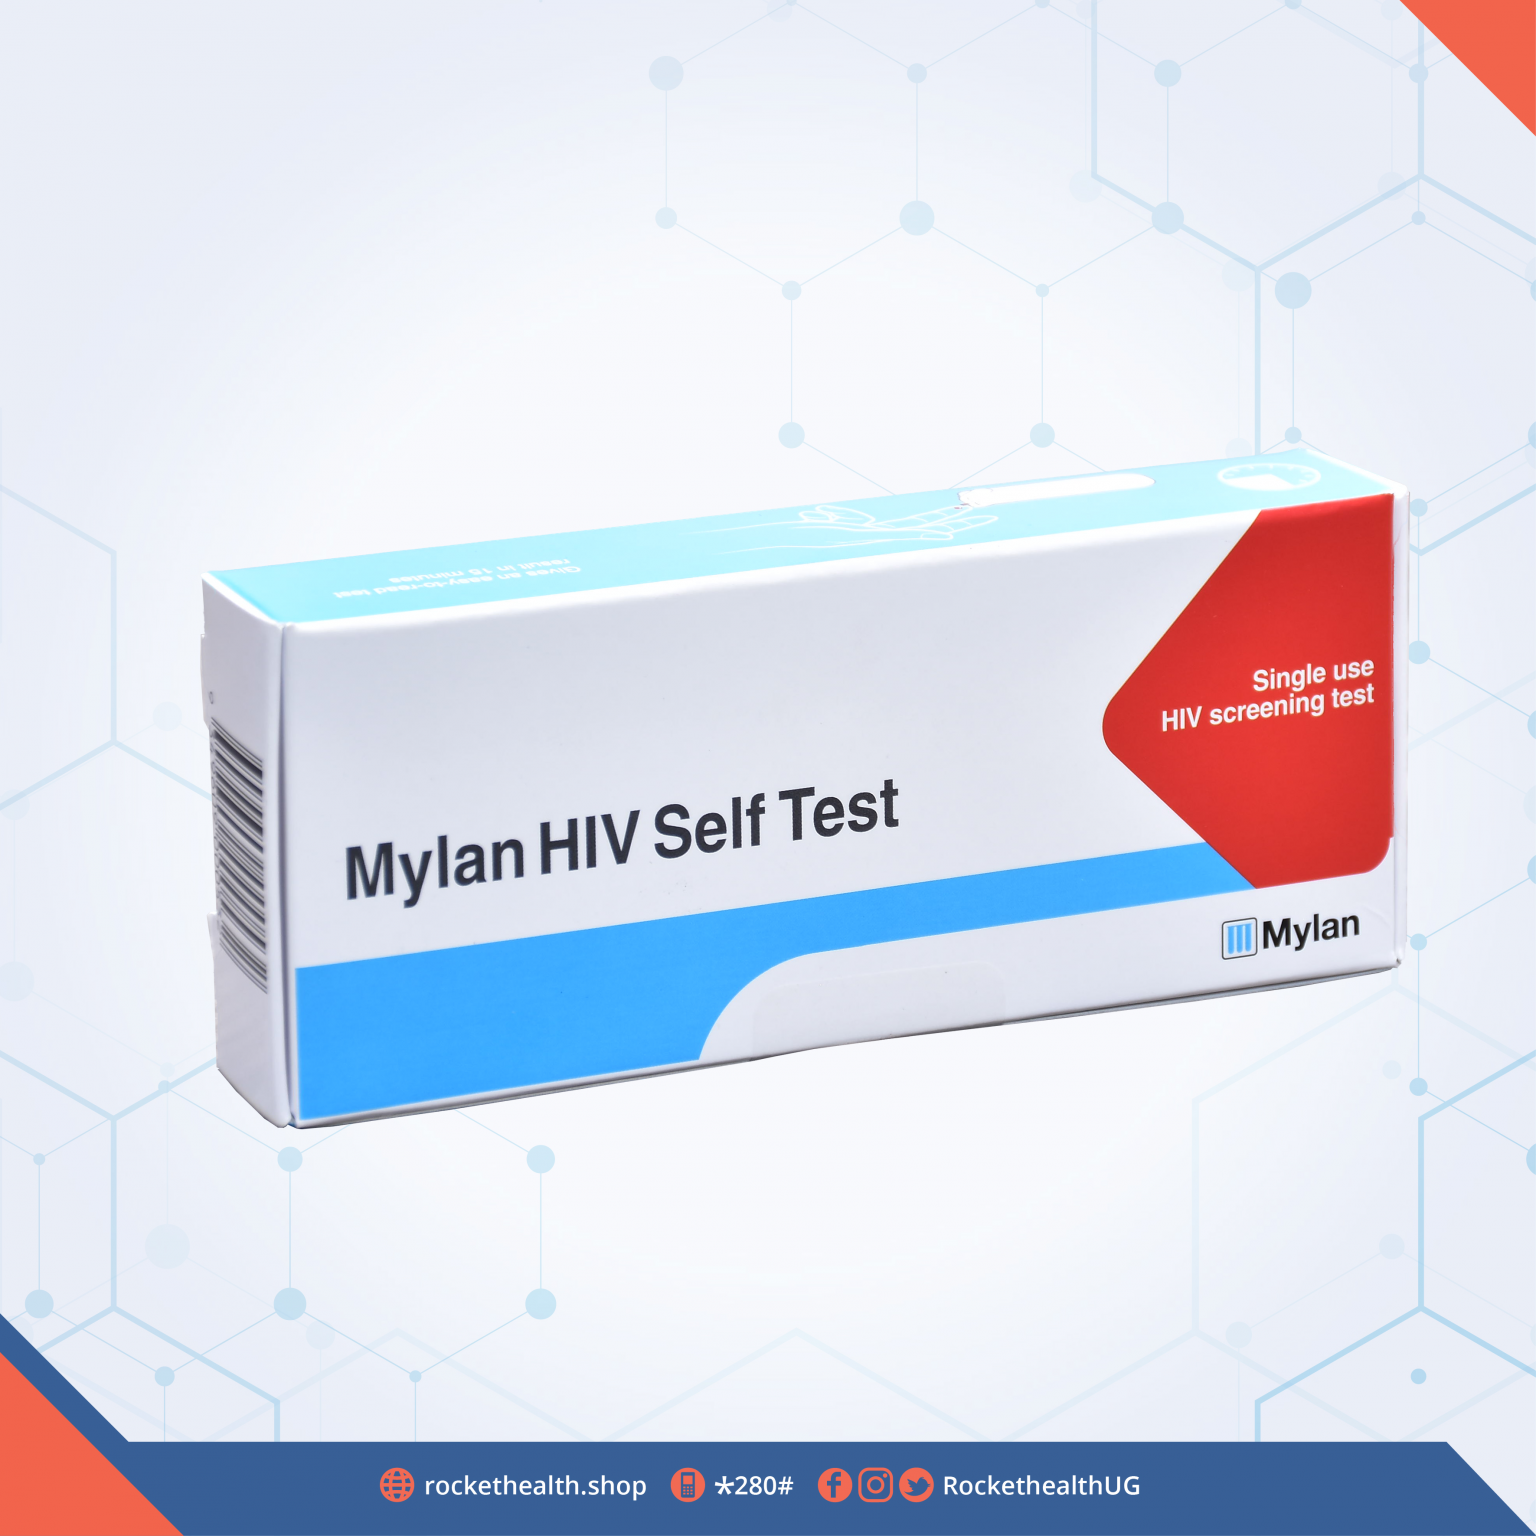 Mylan Hiv Self Test Kit Rocket Health 2577